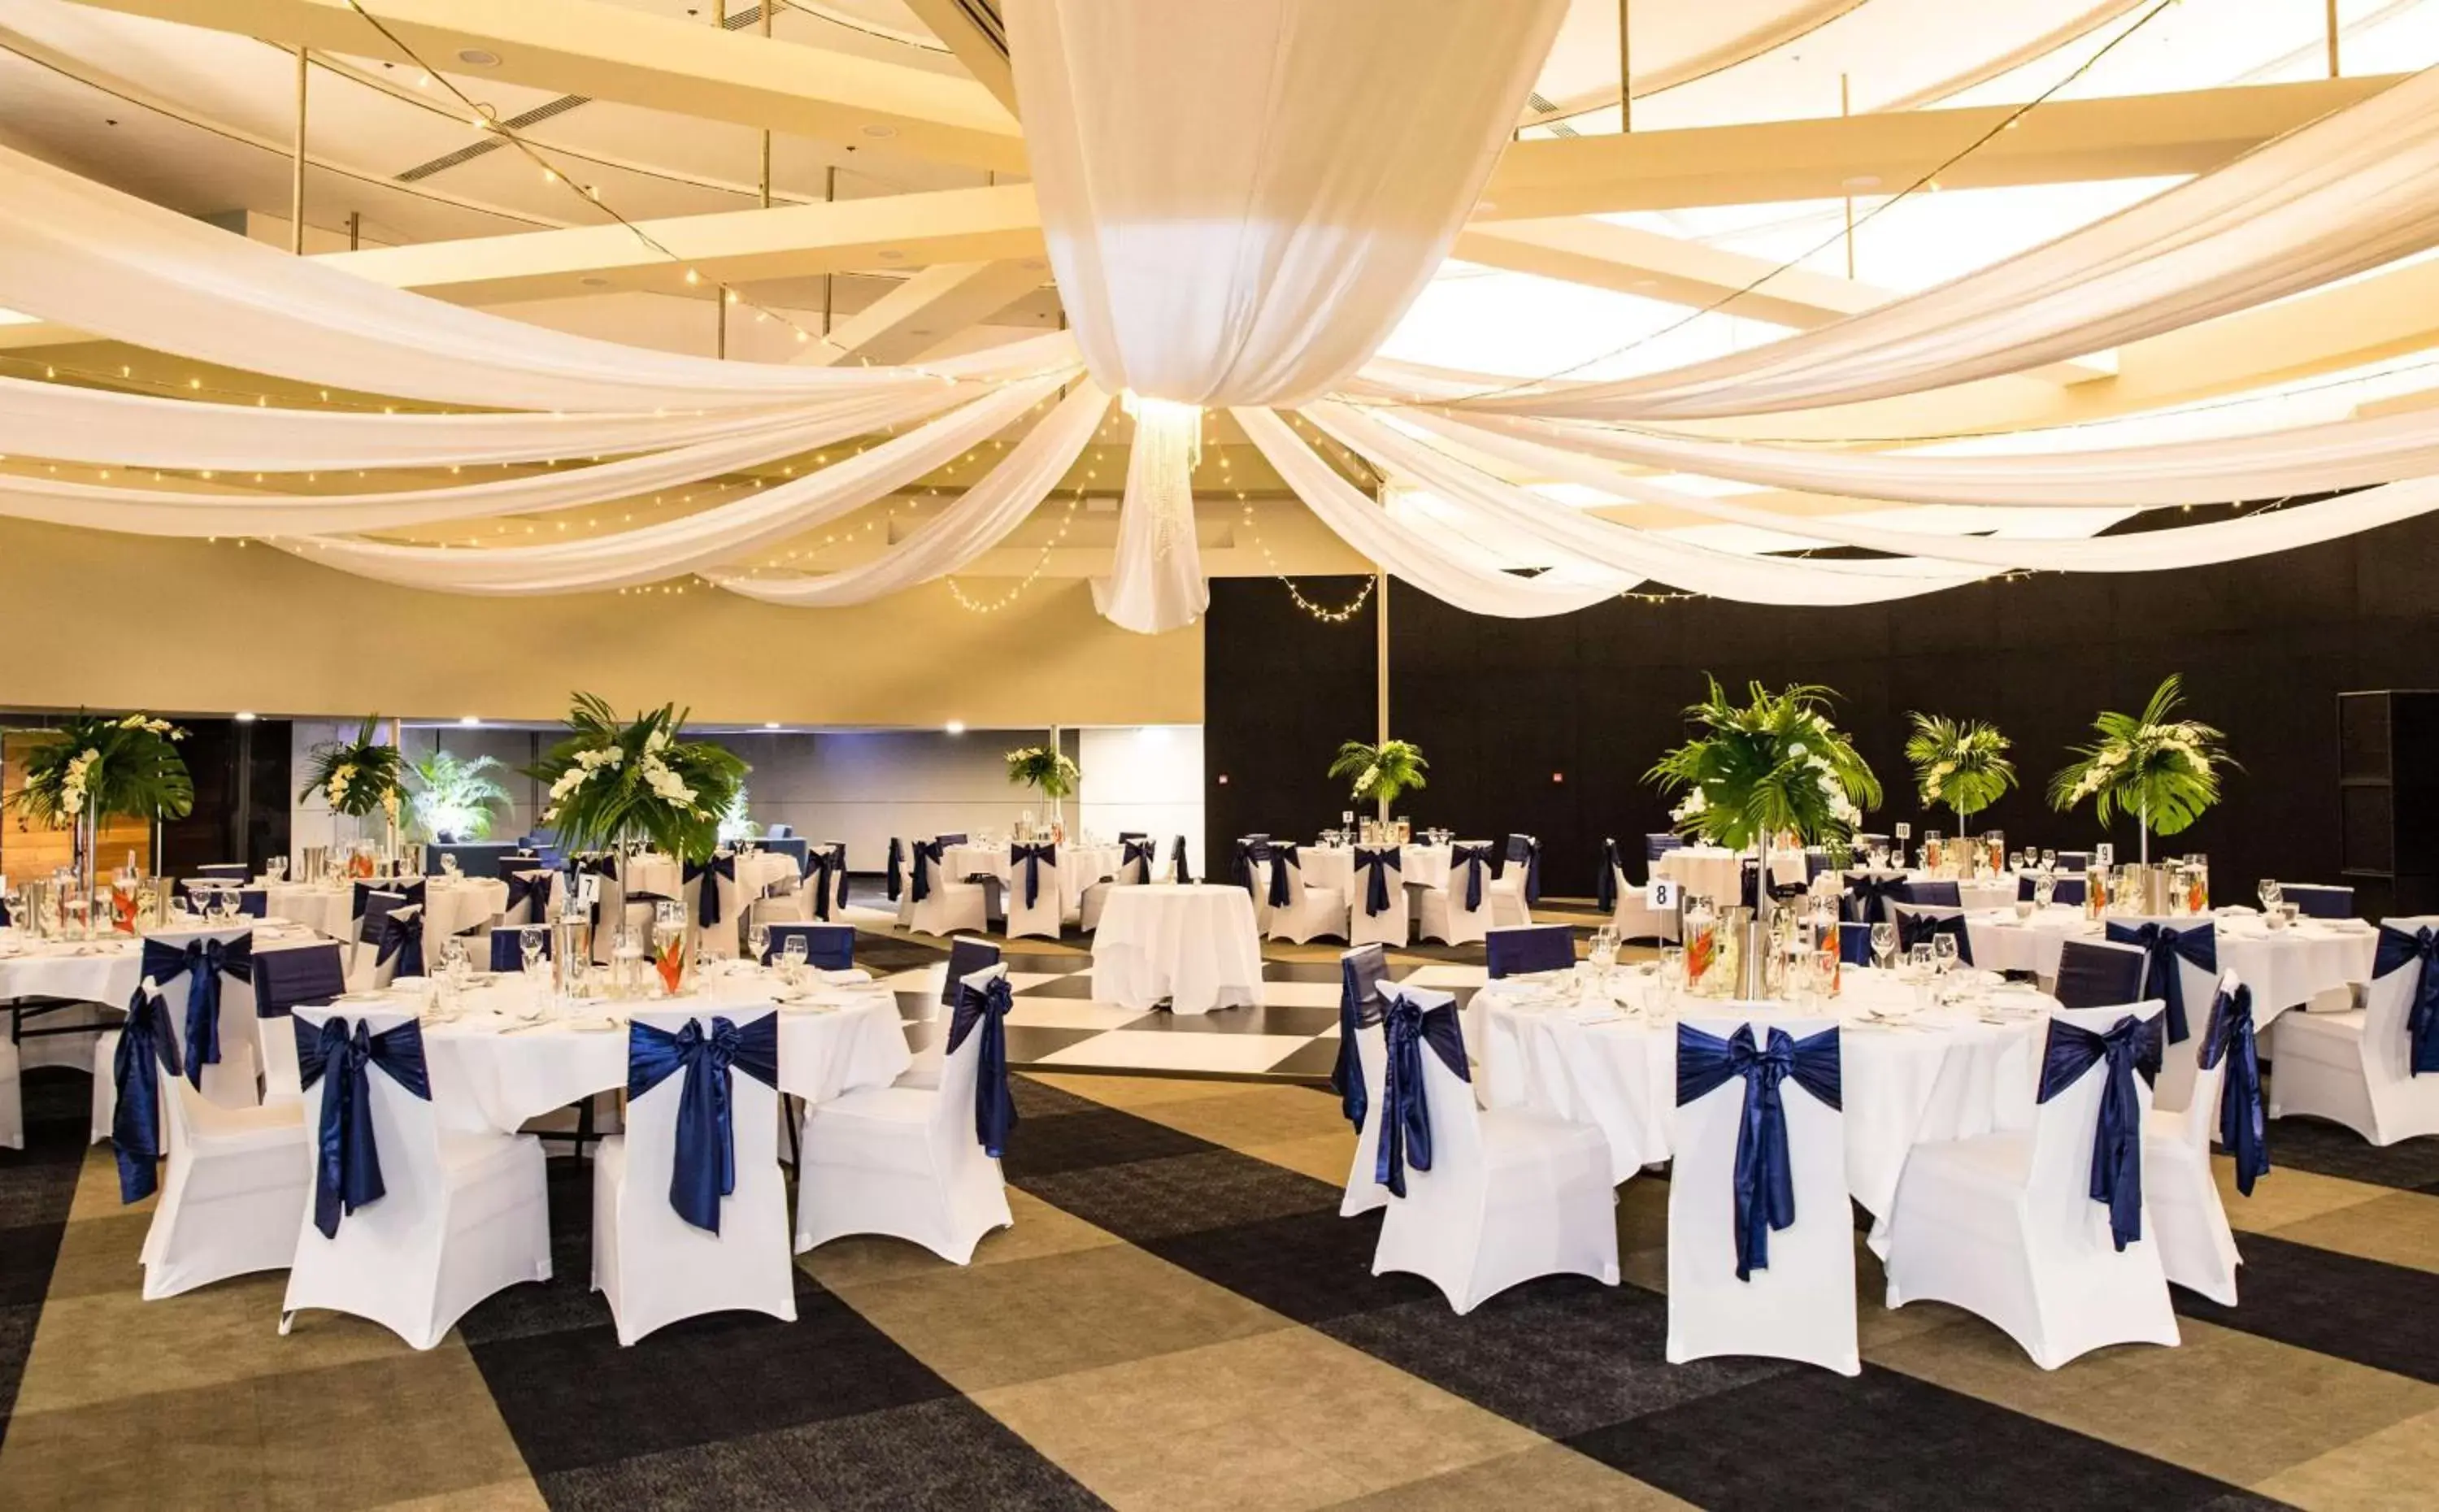 Meeting/conference room, Banquet Facilities in DoubleTree by Hilton Esplanade Darwin